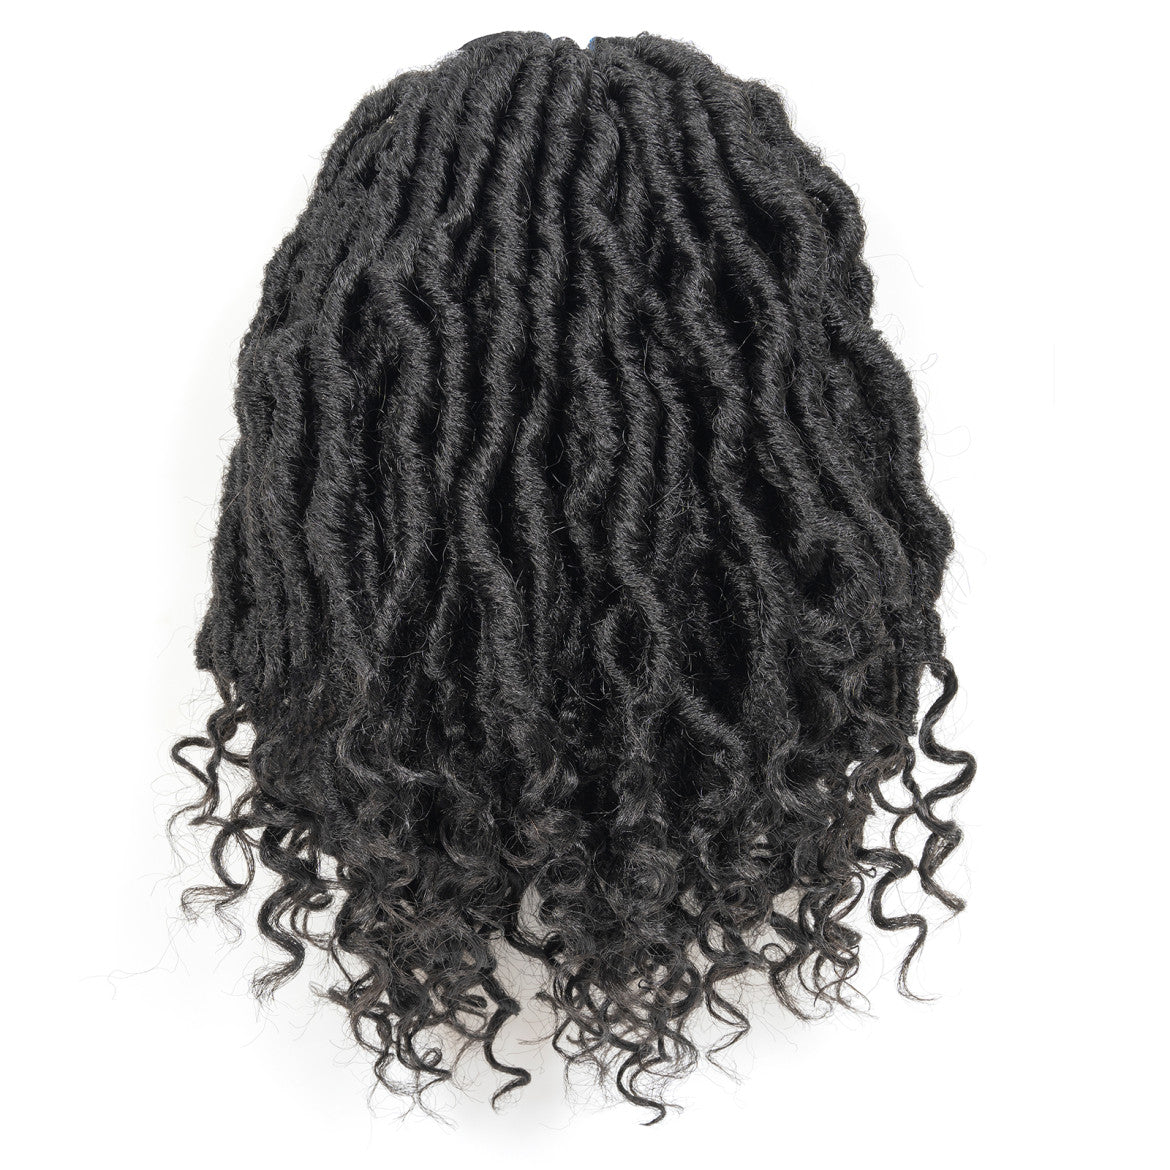 Toyotress Passion Locs Crochet Hair 10-24 Inch 1 Pack | Pre-Looped Handmade Curly Hair Crochet Synthetic Braiding Hair